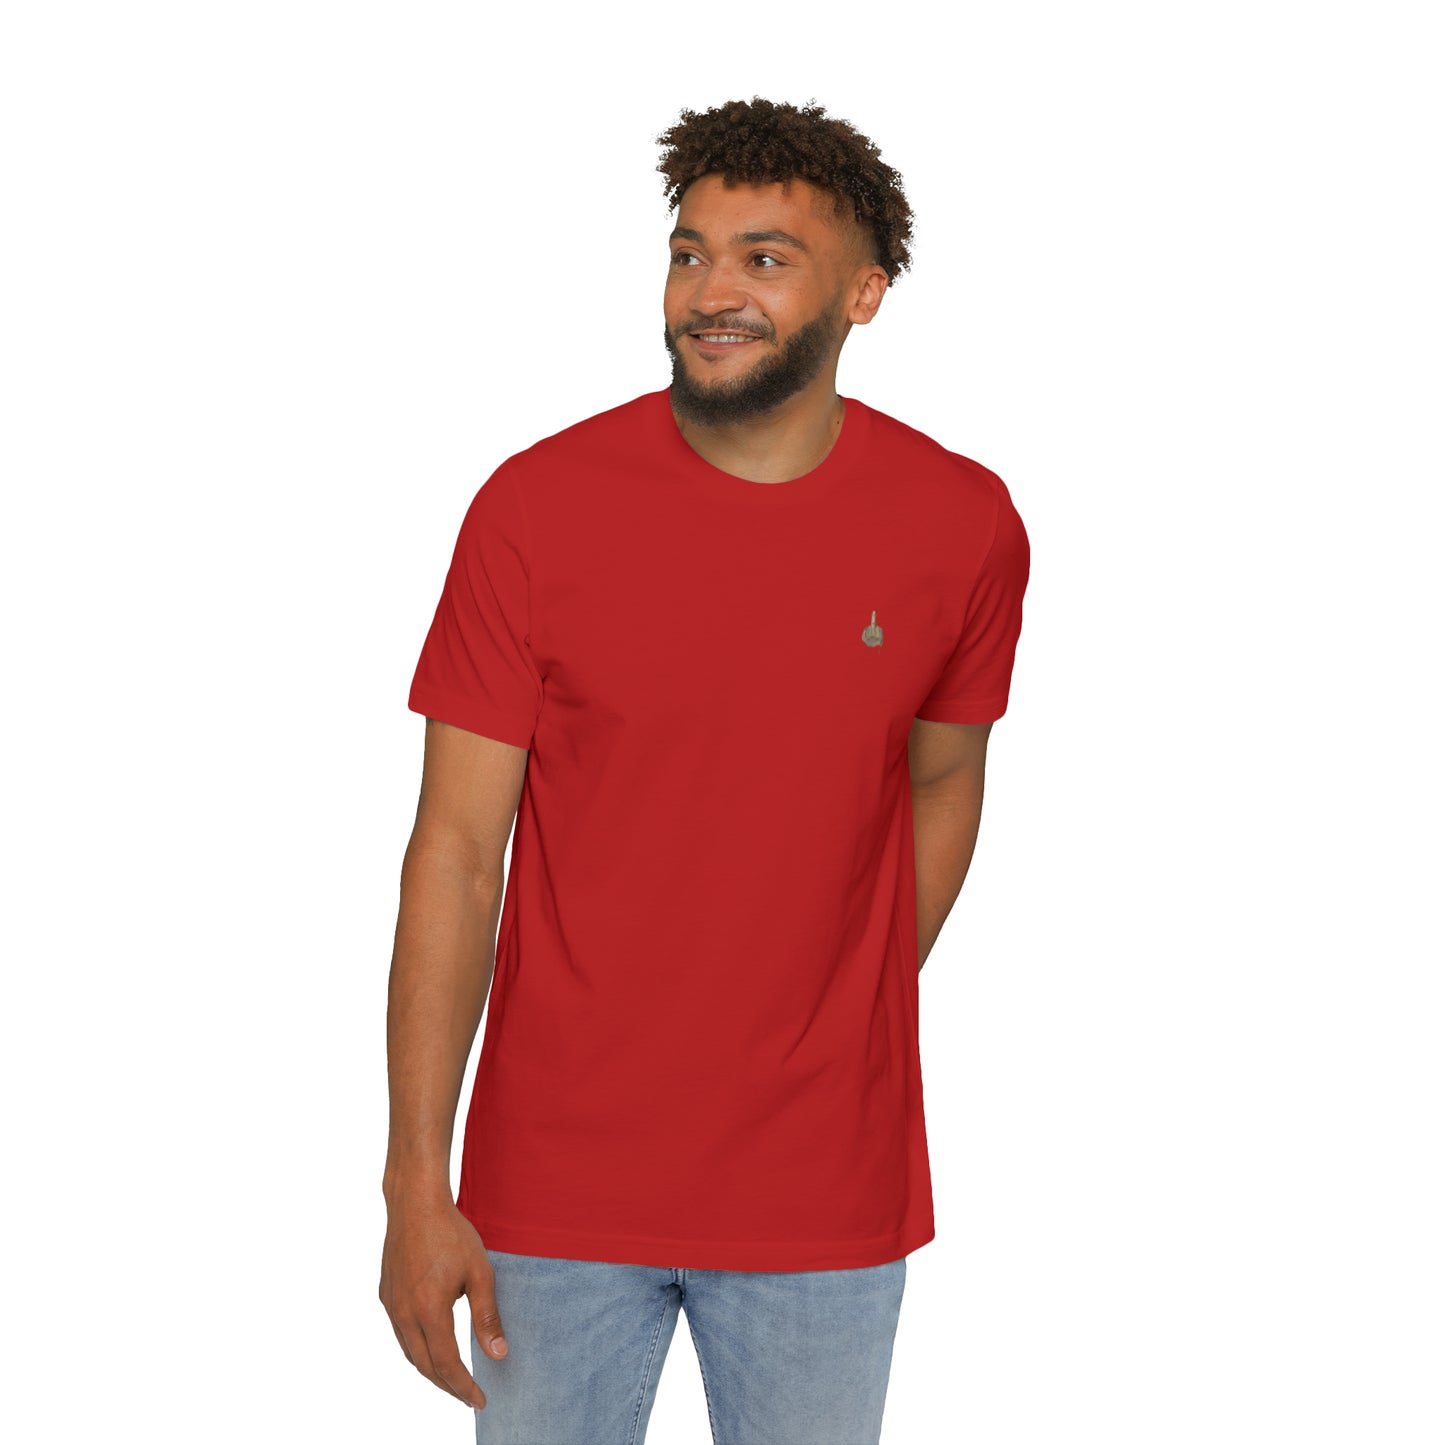 Middle Finger T-shirt, Middle Finger Tee USA-Made Unisex Short-Sleeve Jersey T-Shirt